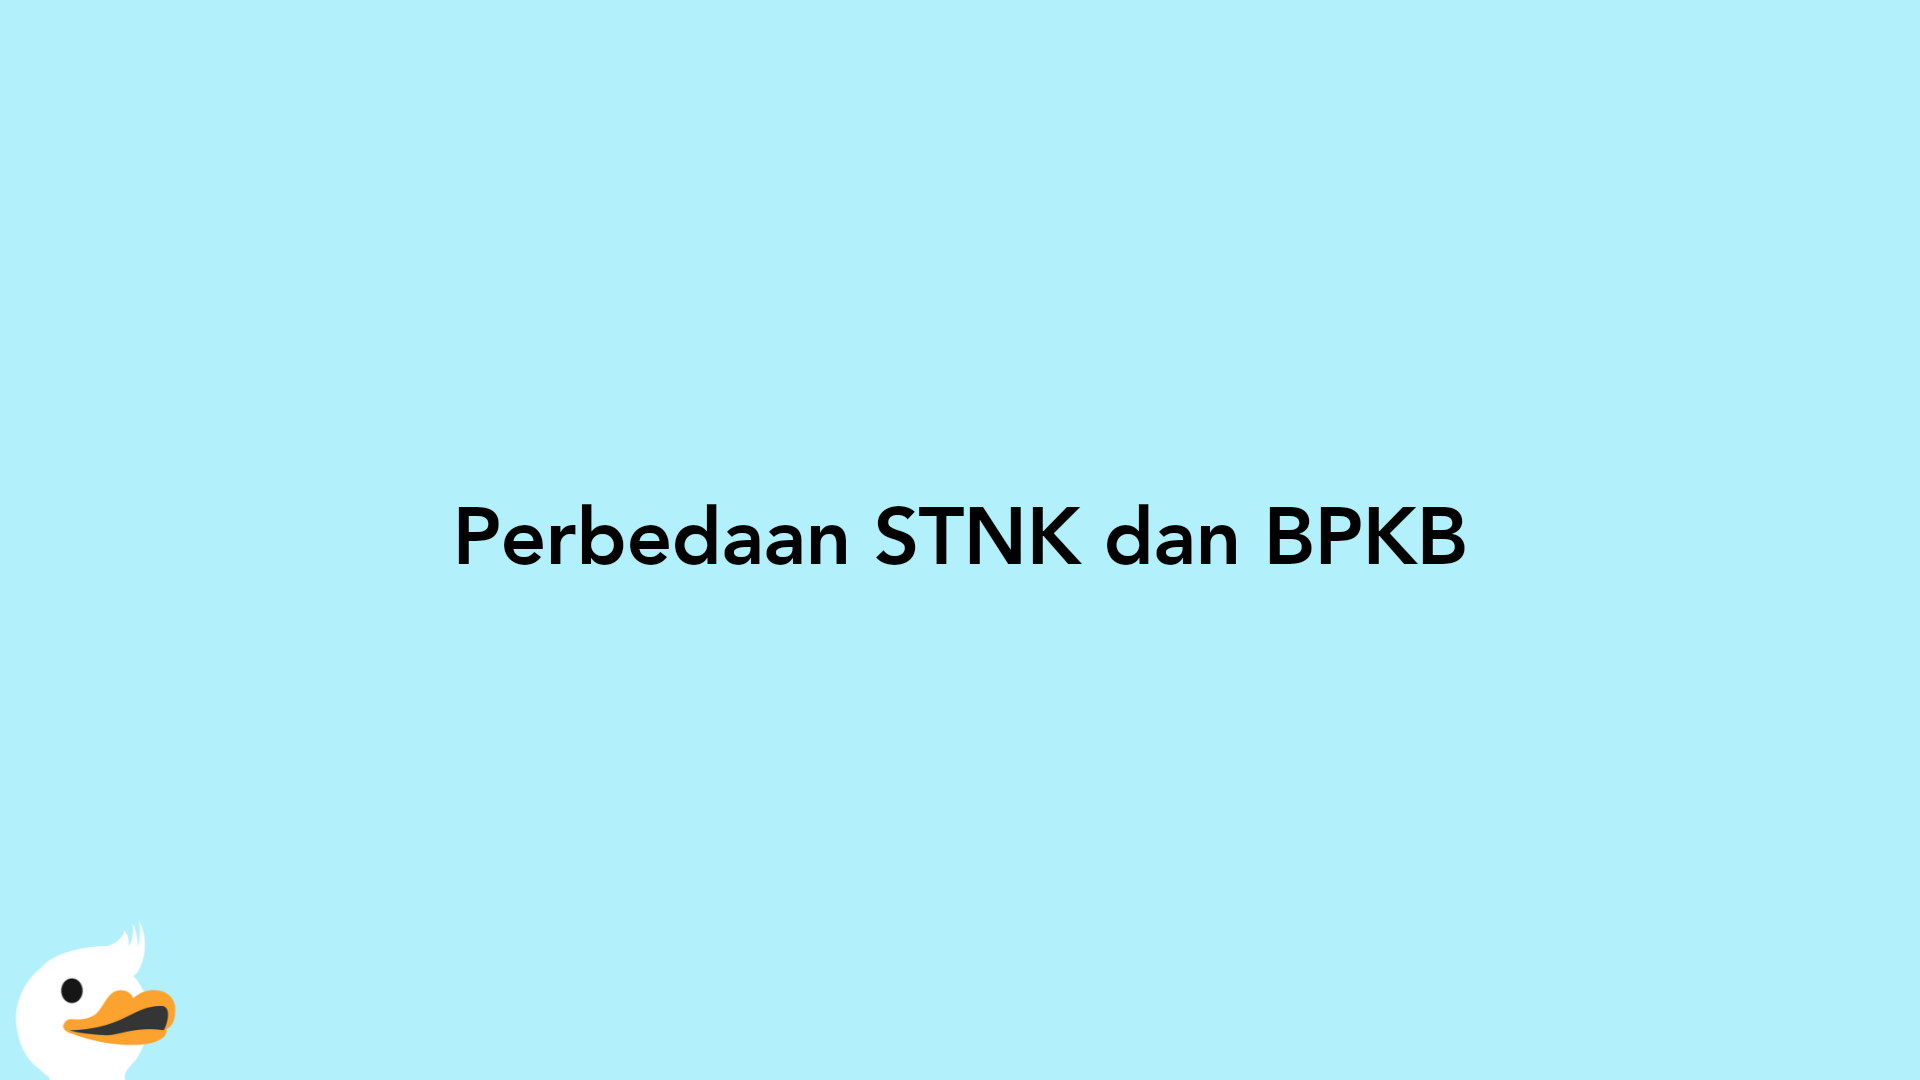 Perbedaan STNK dan BPKB